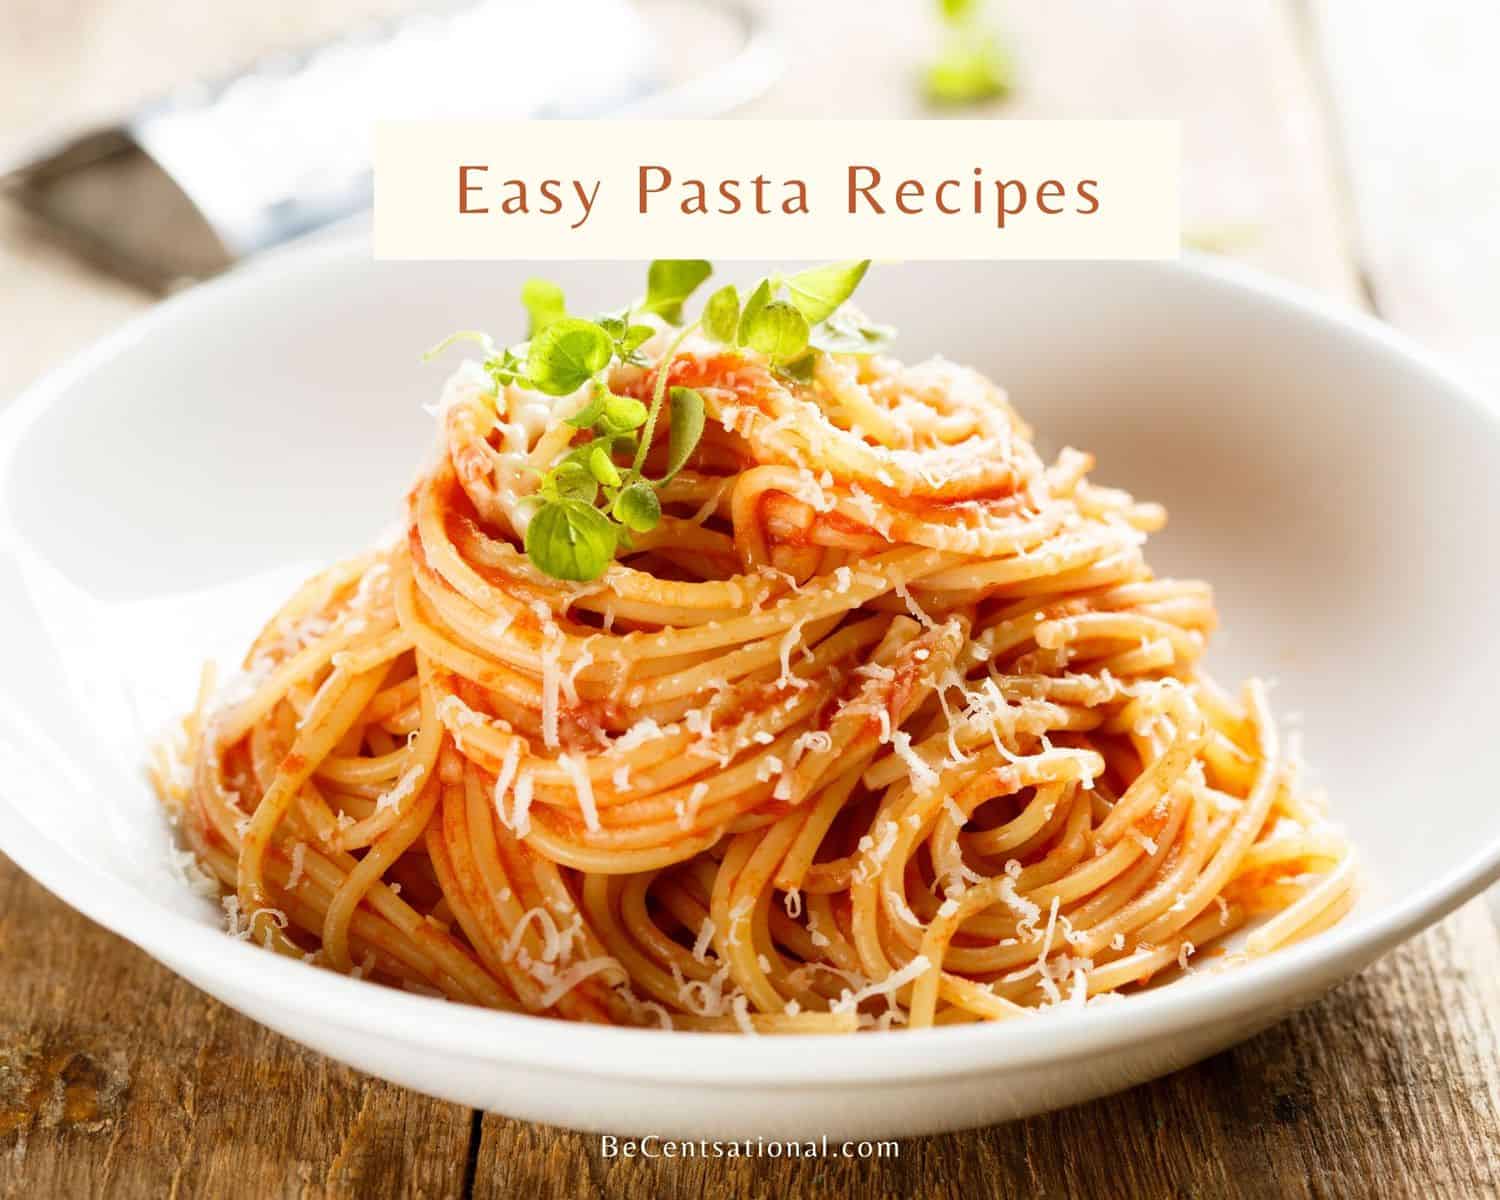 21 Easy Pasta Recipes for Dinner - Be Centsational